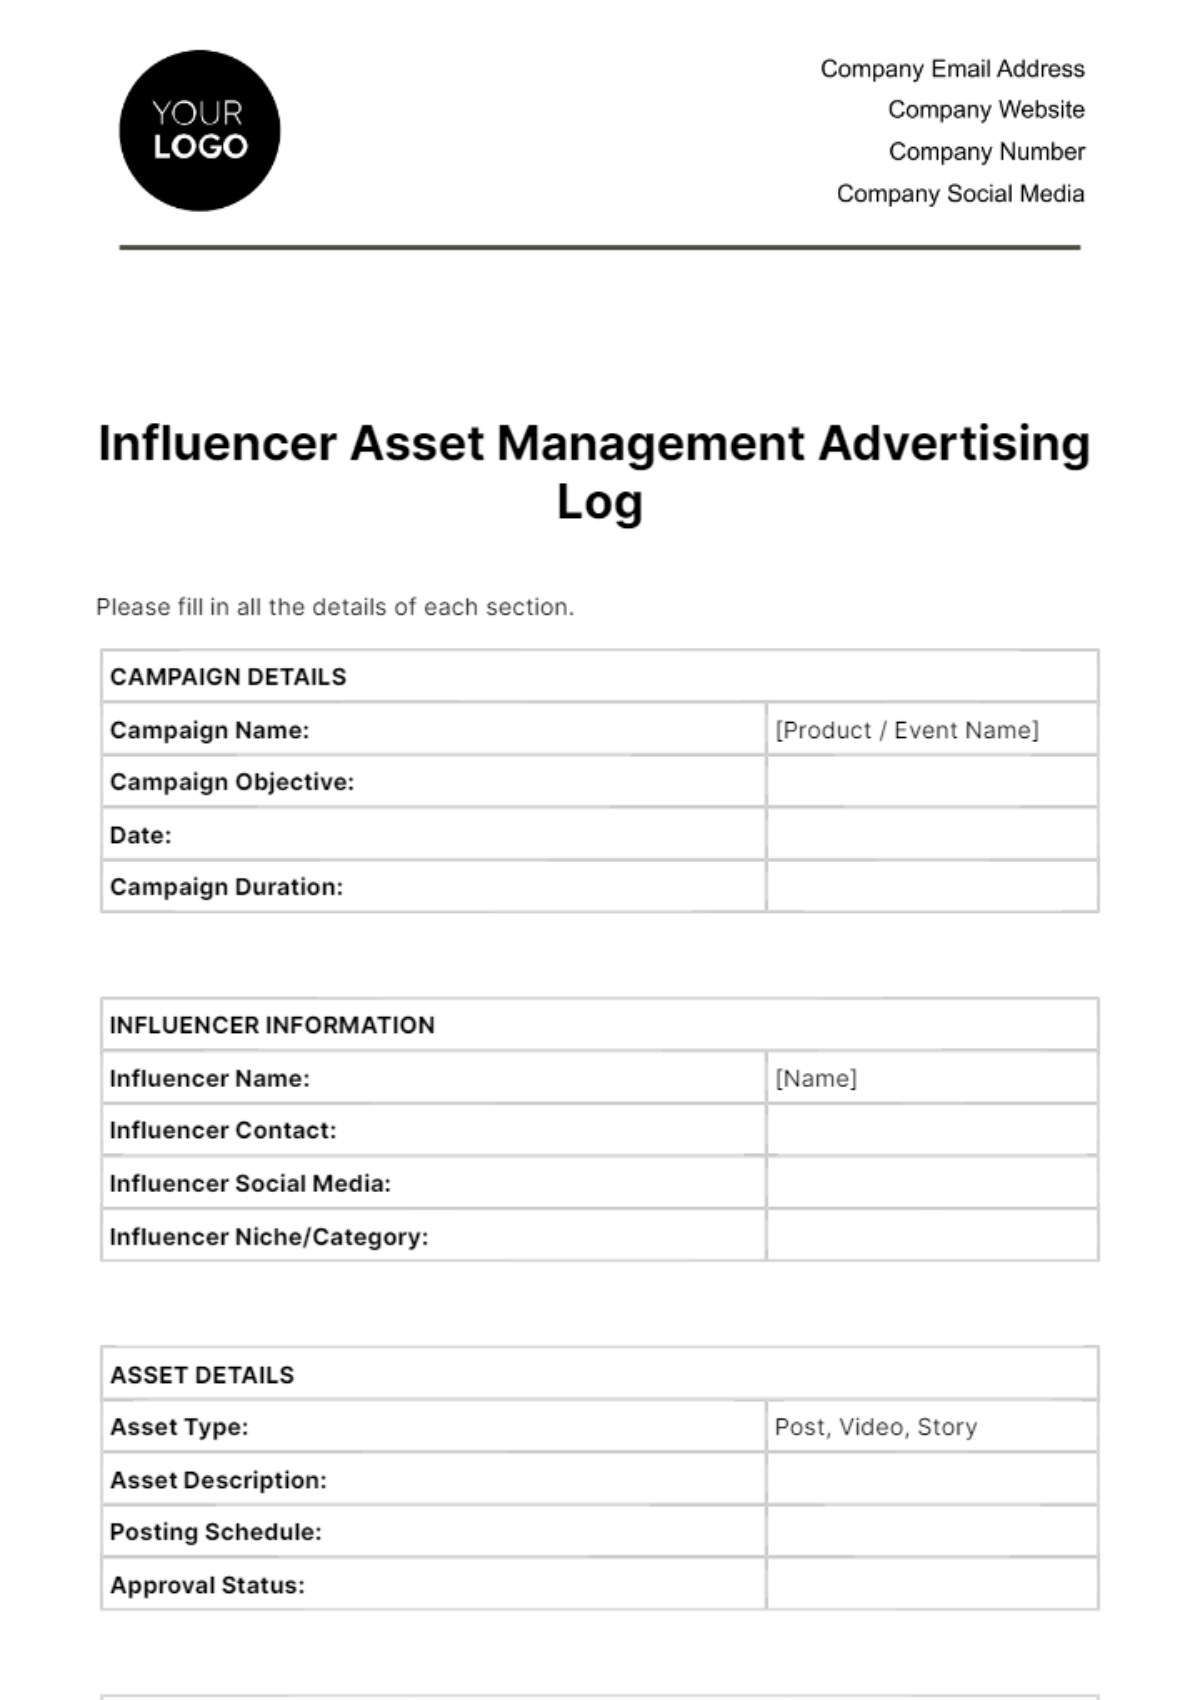 Free Influencer Asset Management Advertising Log Template